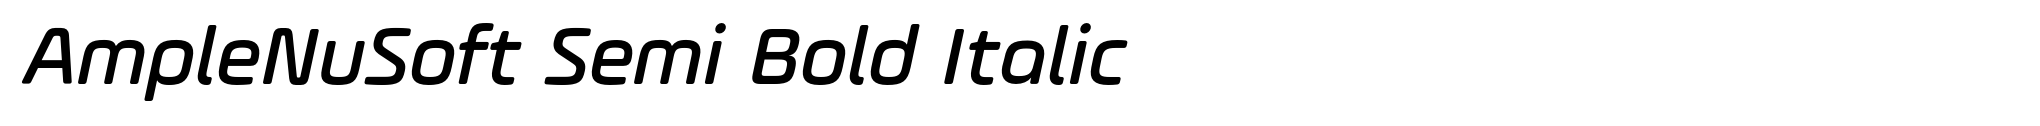 AmpleNuSoft Semi Bold Italic image